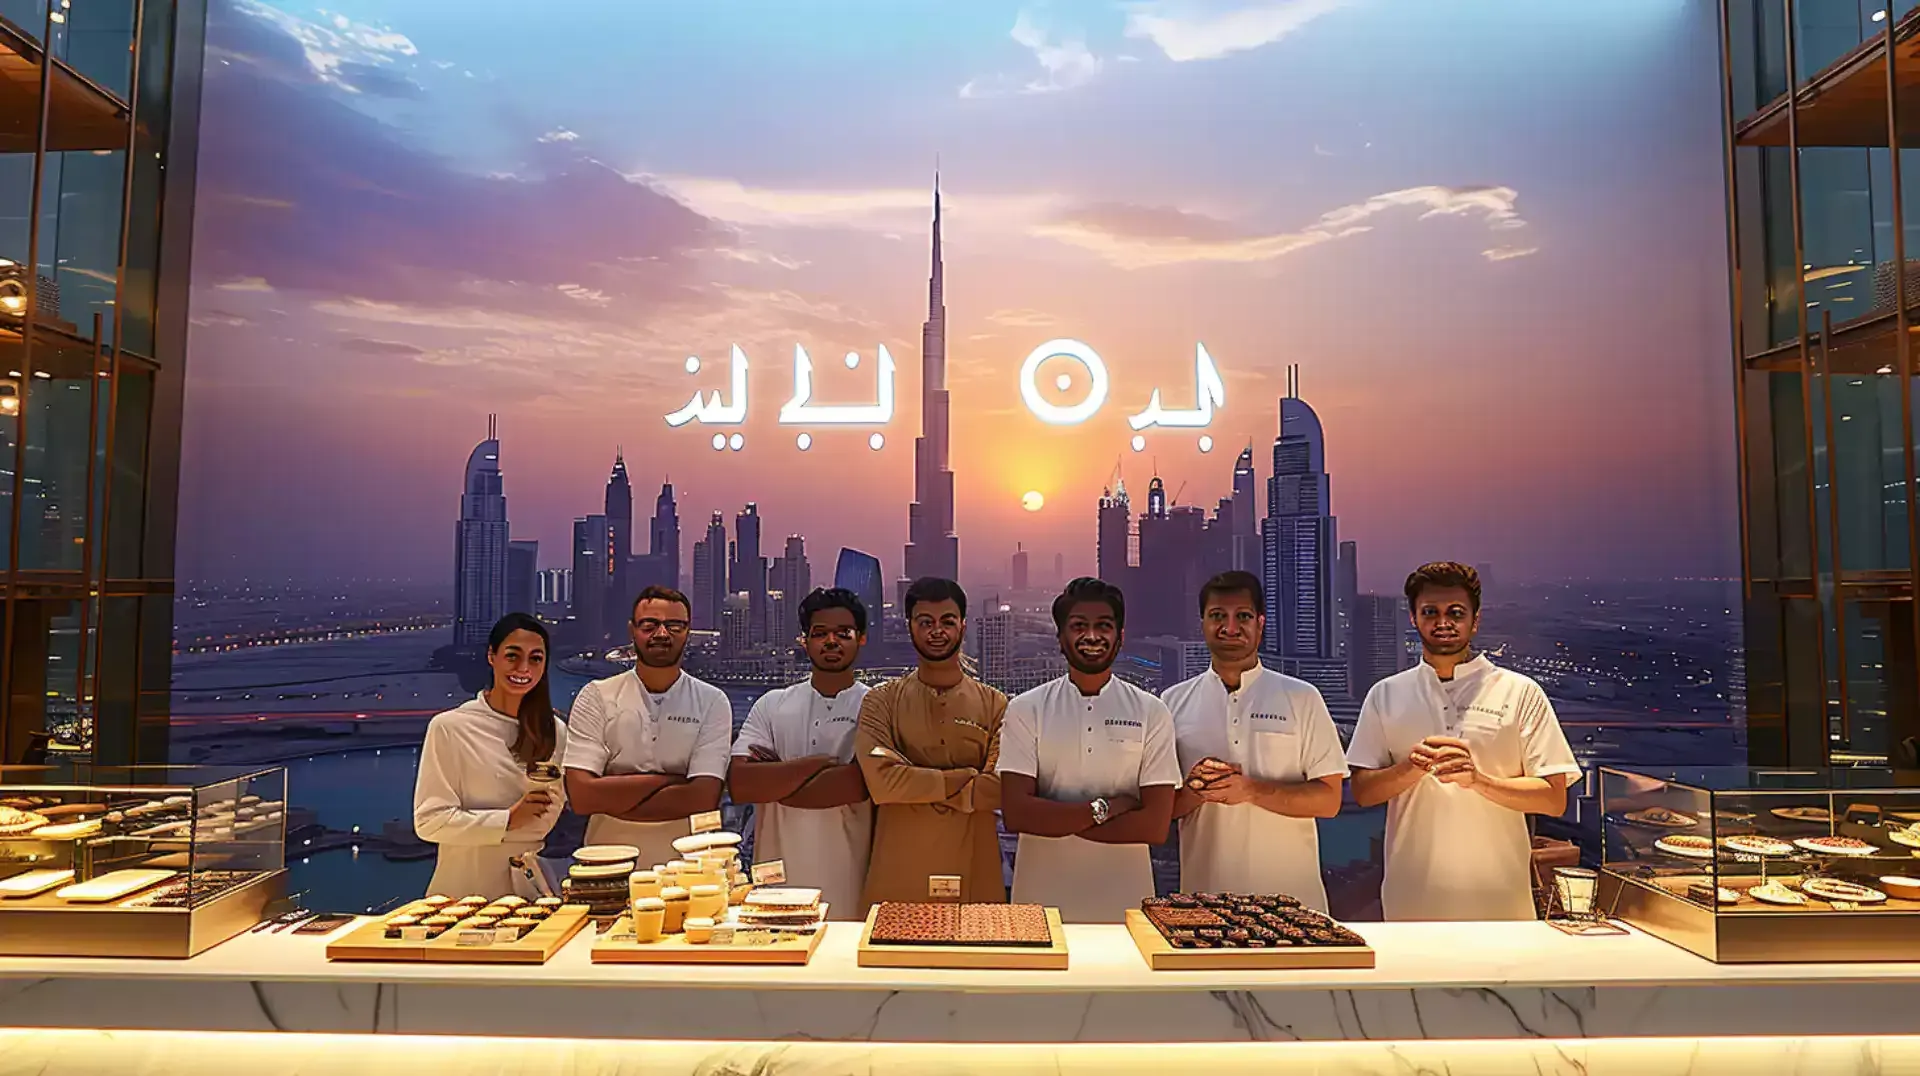 Illustration showcasing the entrepreneurial spirit and opportunities in Dubai